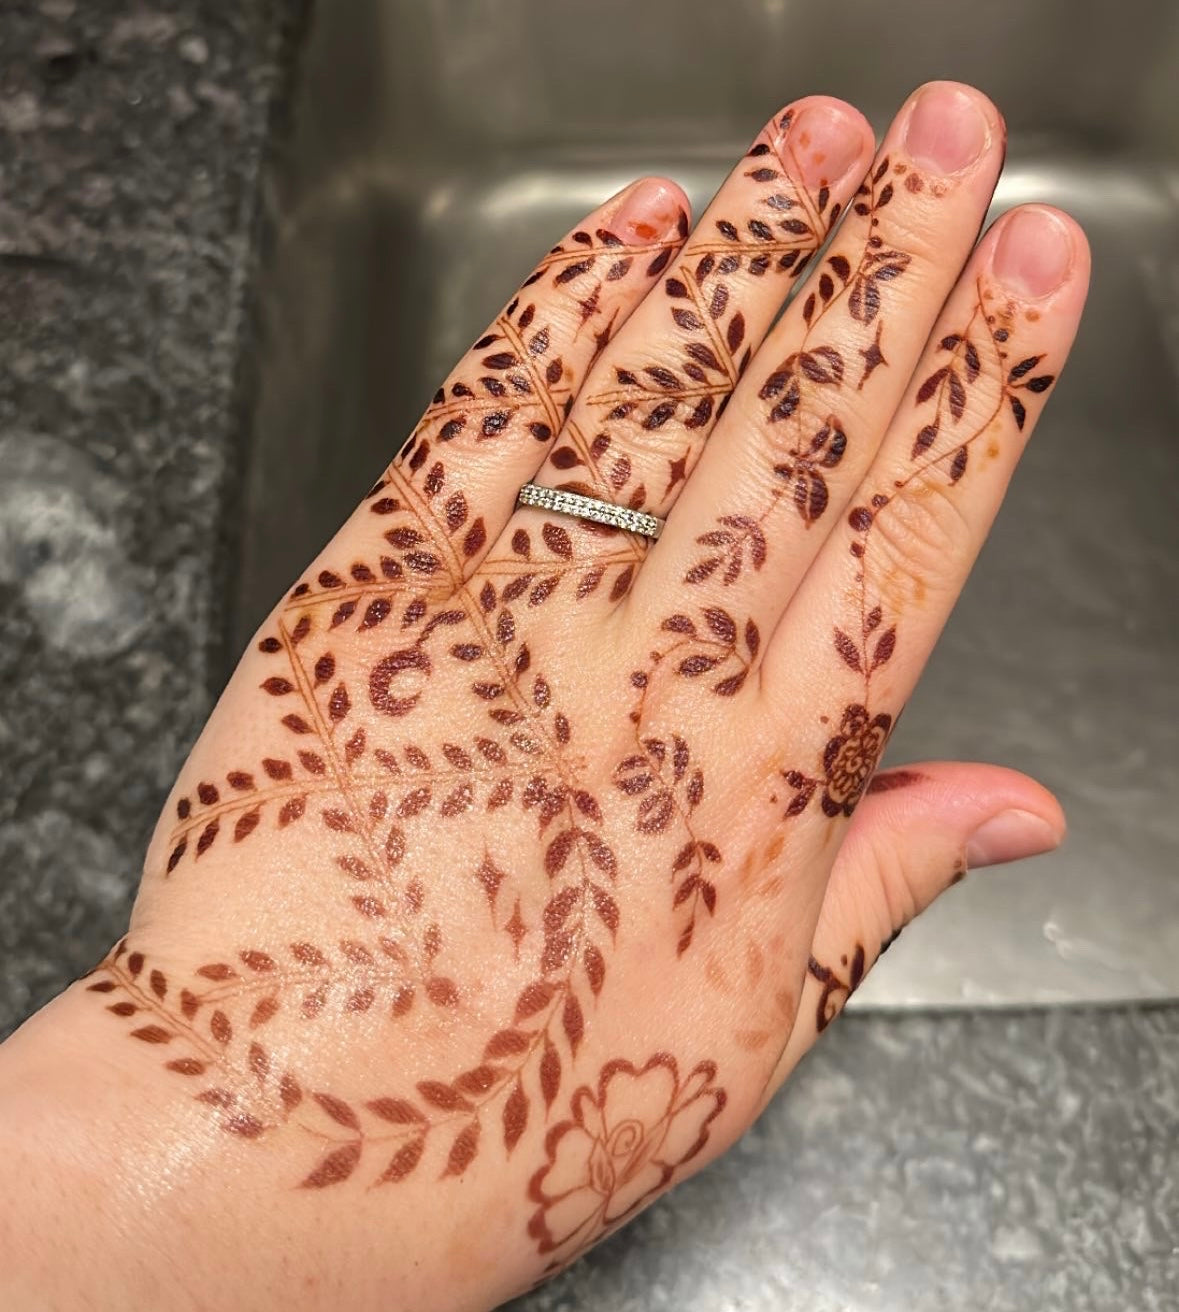 Amazon.com: White Henna Hand - Practice Henna Tattoo Kit for Henna Paste,  Plastic Hand Template for Temporary Tattoo, Mehendi, Body Art : Beauty &  Personal Care